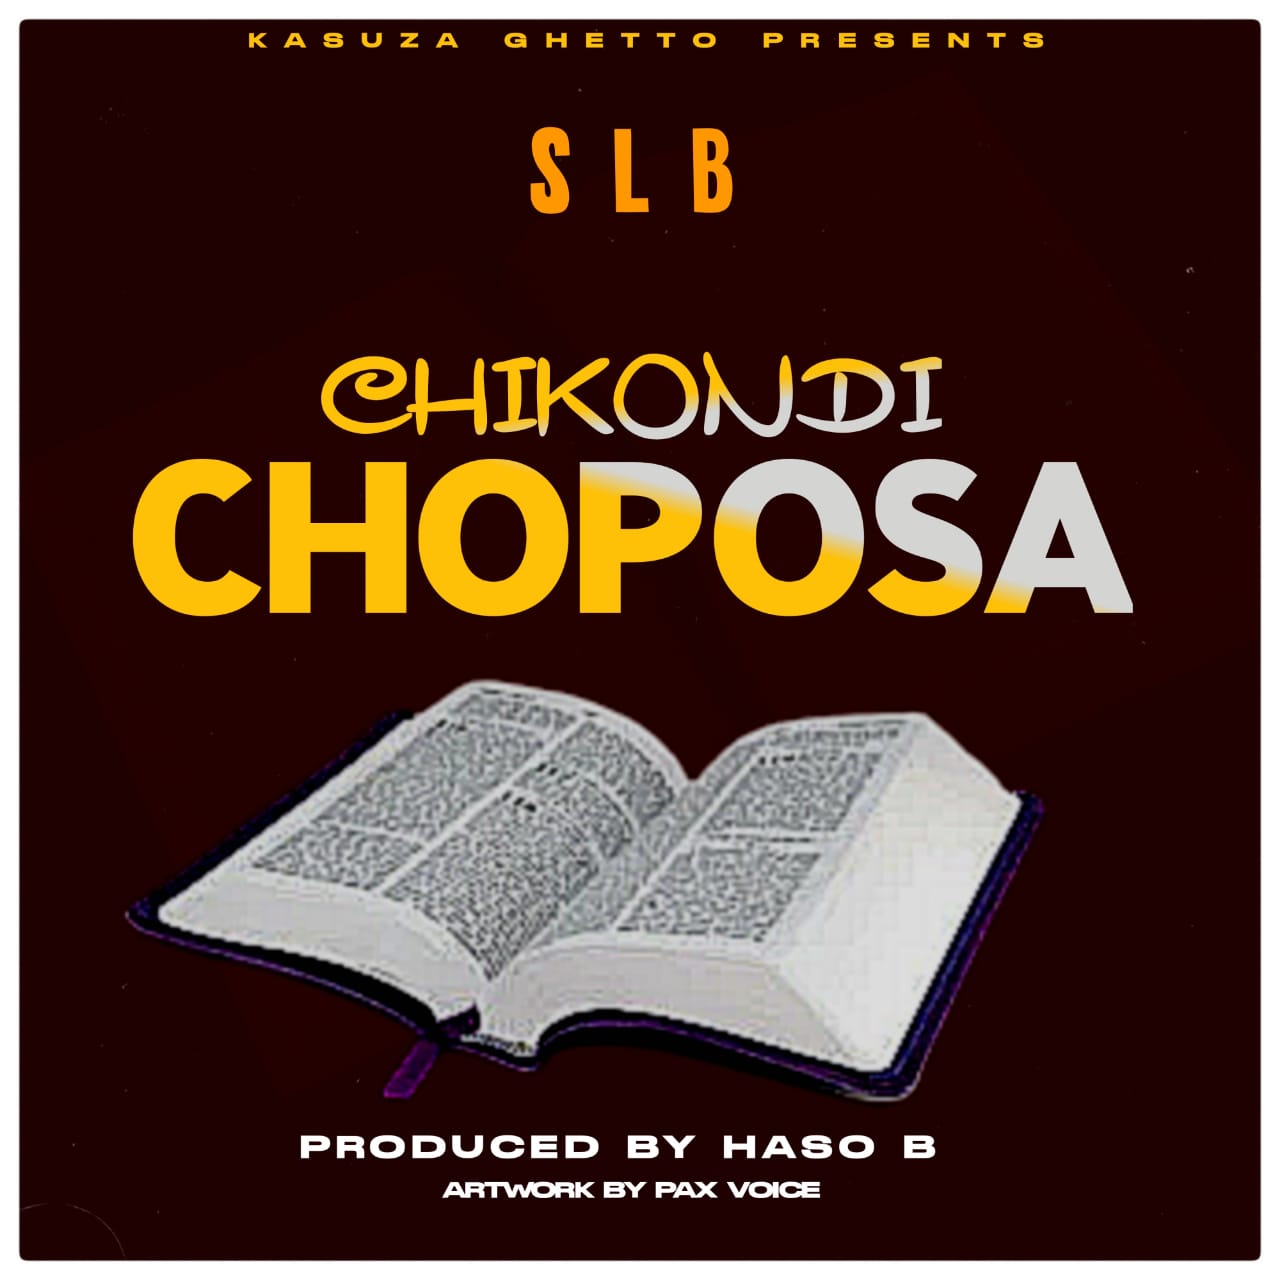 SLB-Chikondi-Choposa-prod-by-haso-b